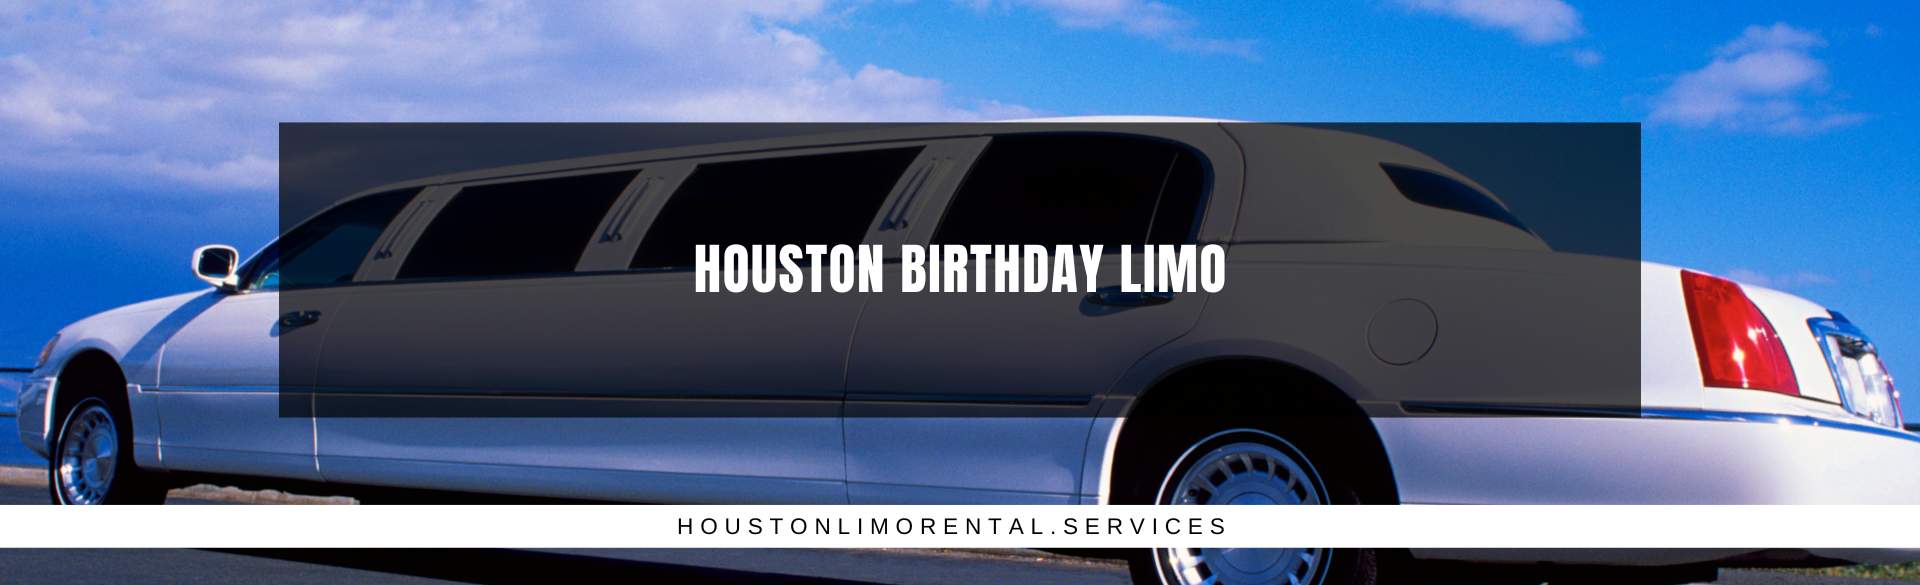 Houston Birthday Limo